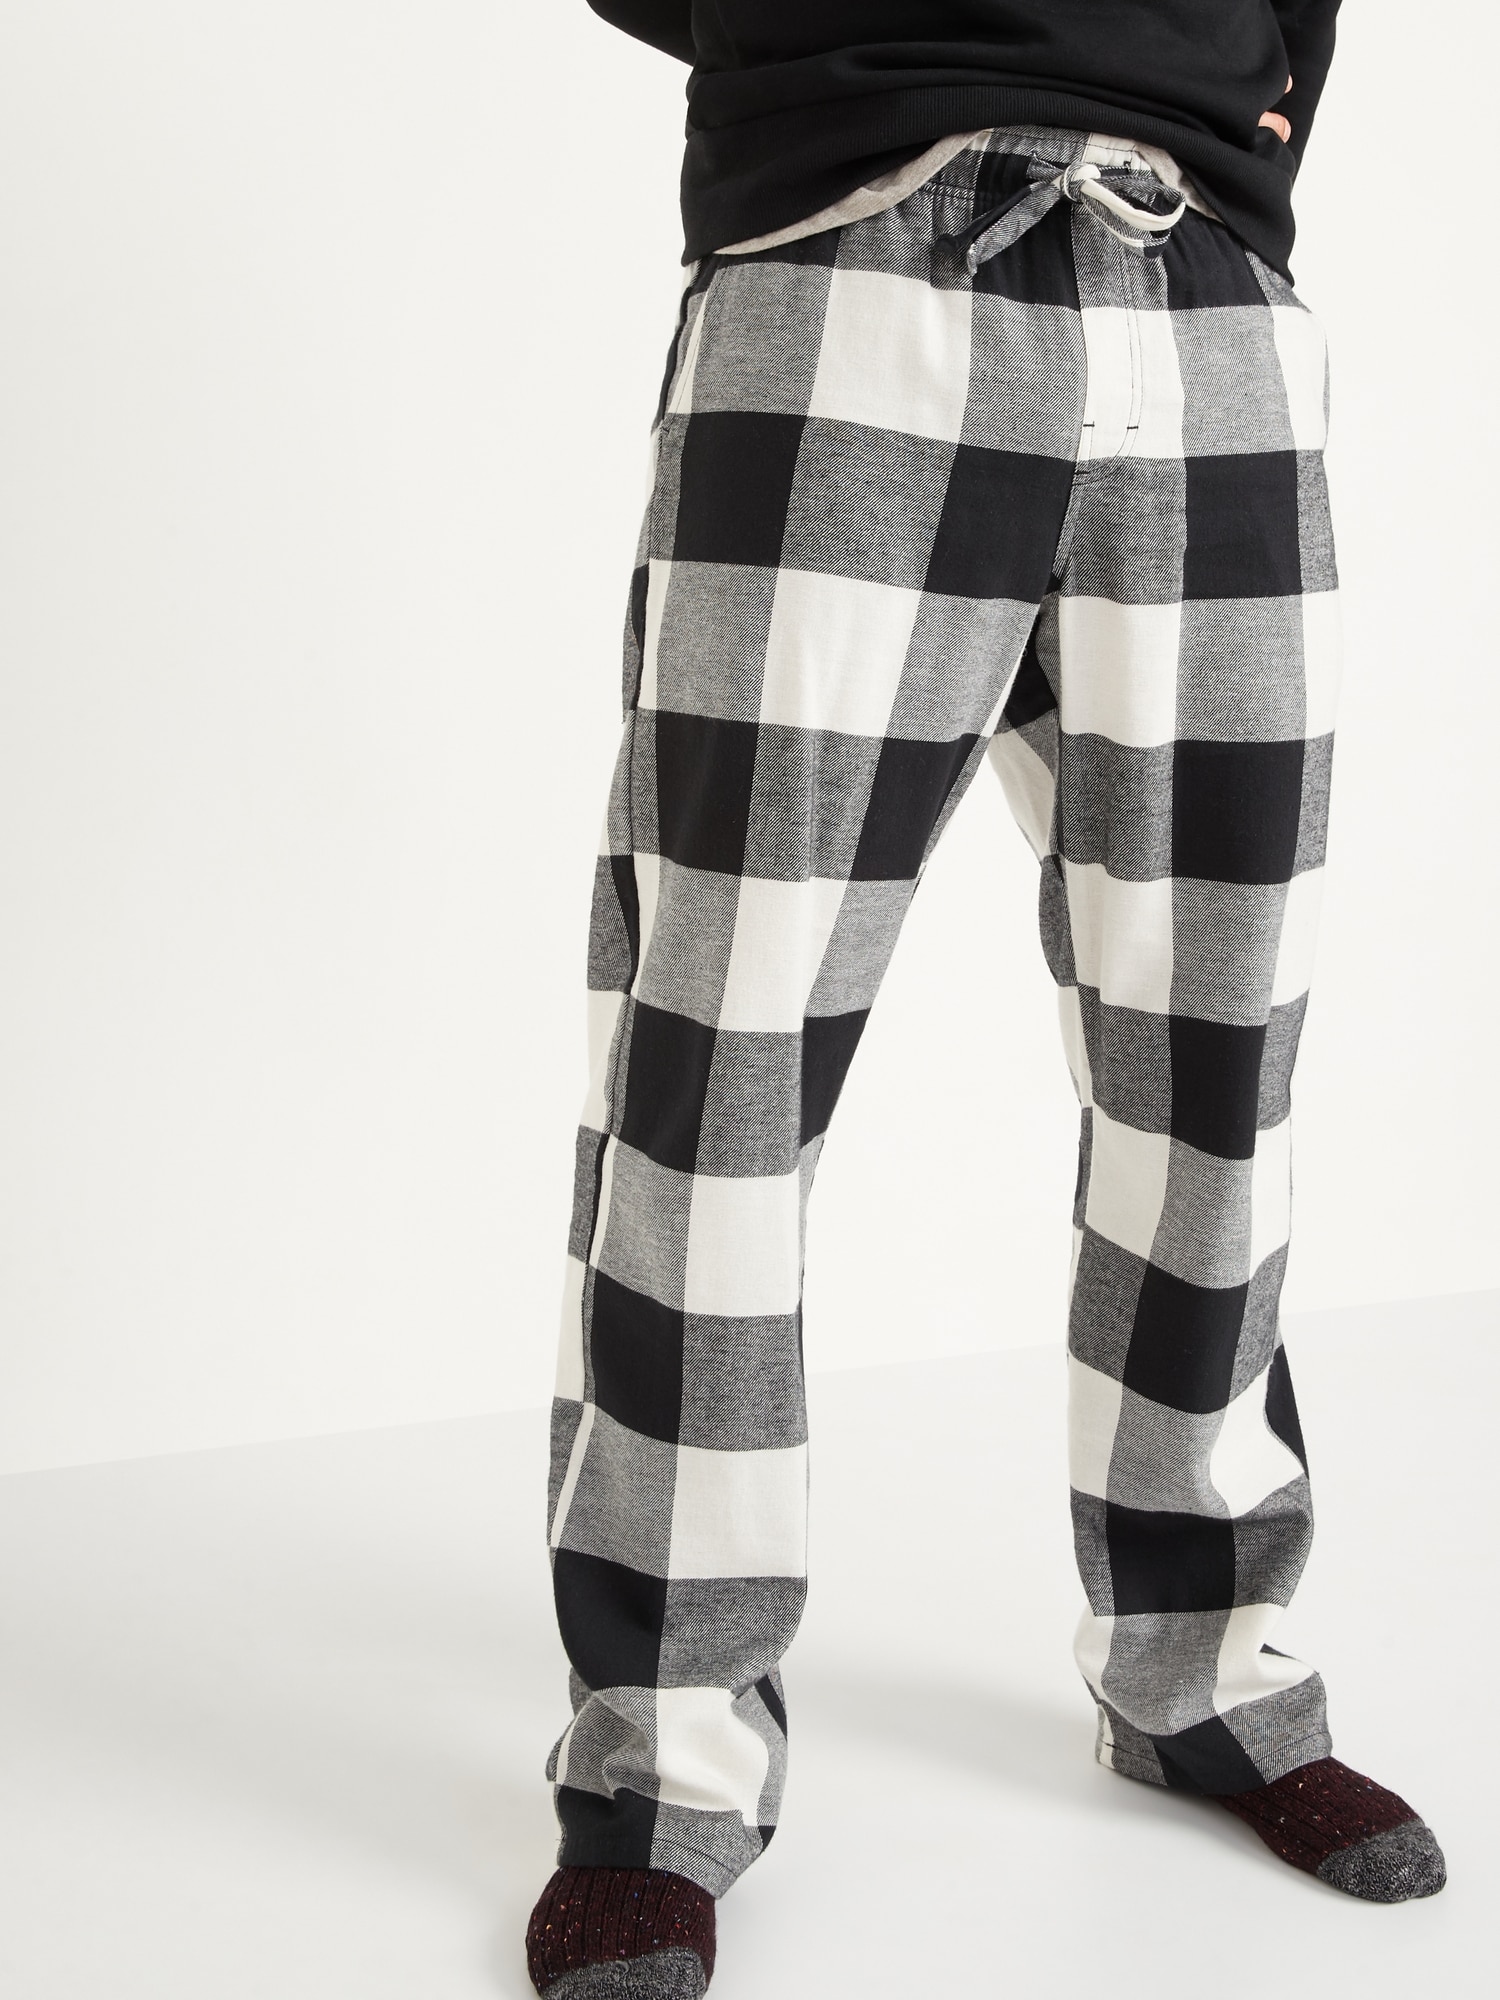 checkered pants mens black and white